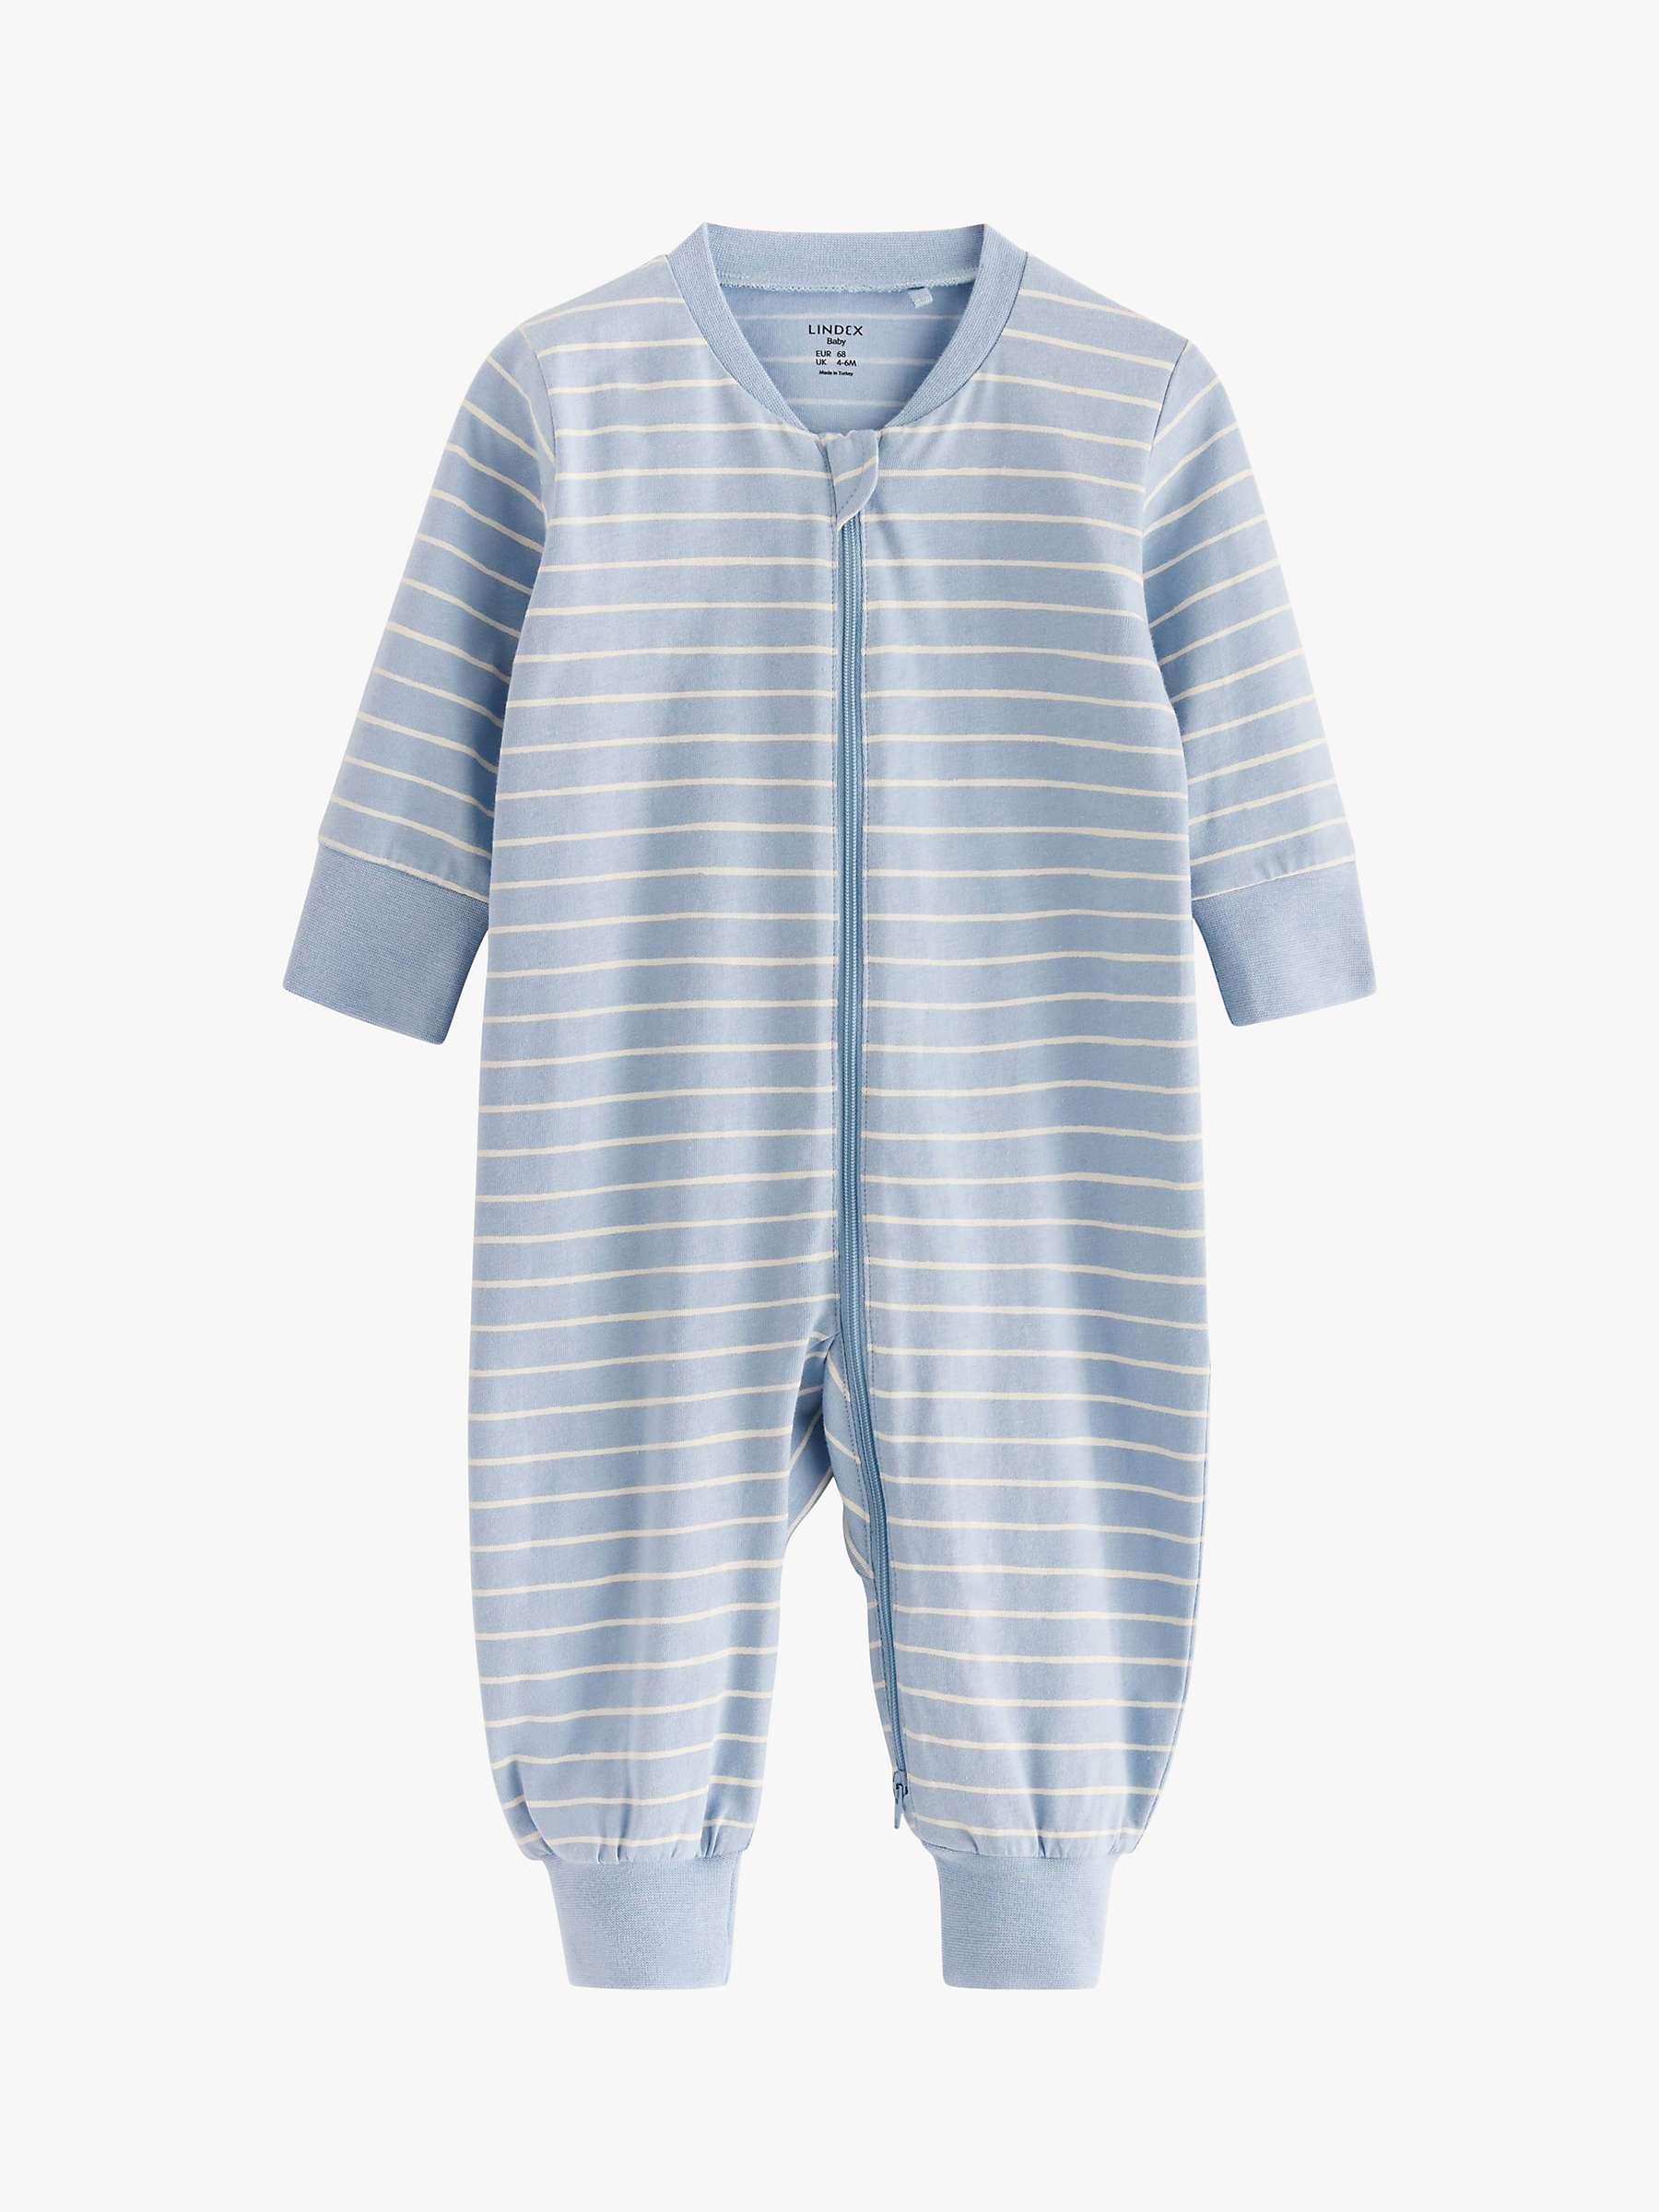 Buy Lindex Baby Organic Cotton Striped Sleepsuit, Light Blue Online at johnlewis.com